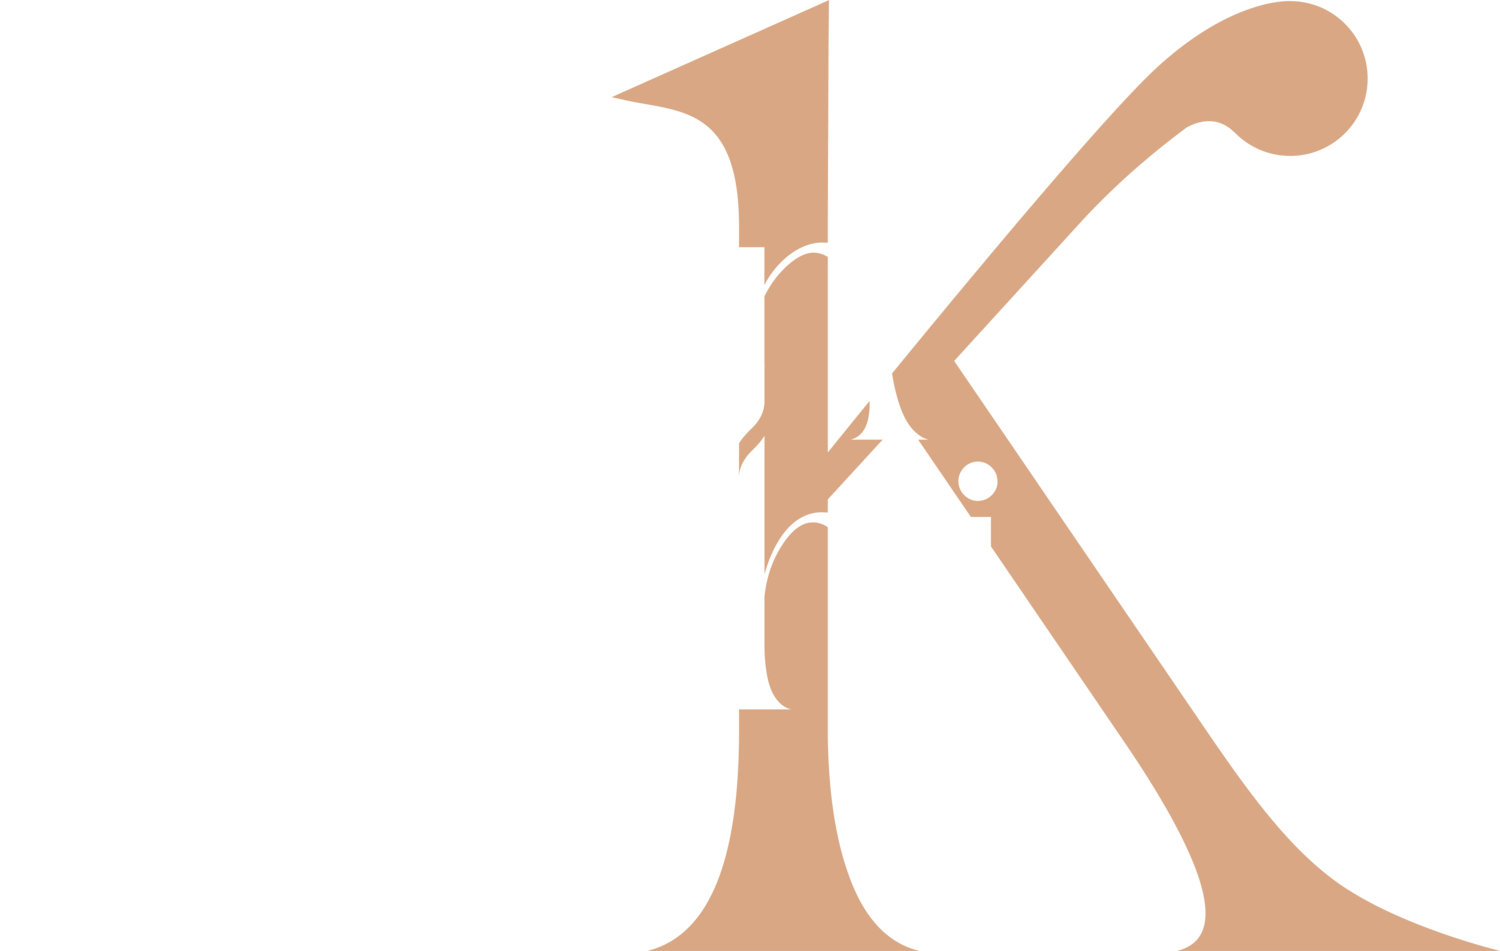 Salon Kephi